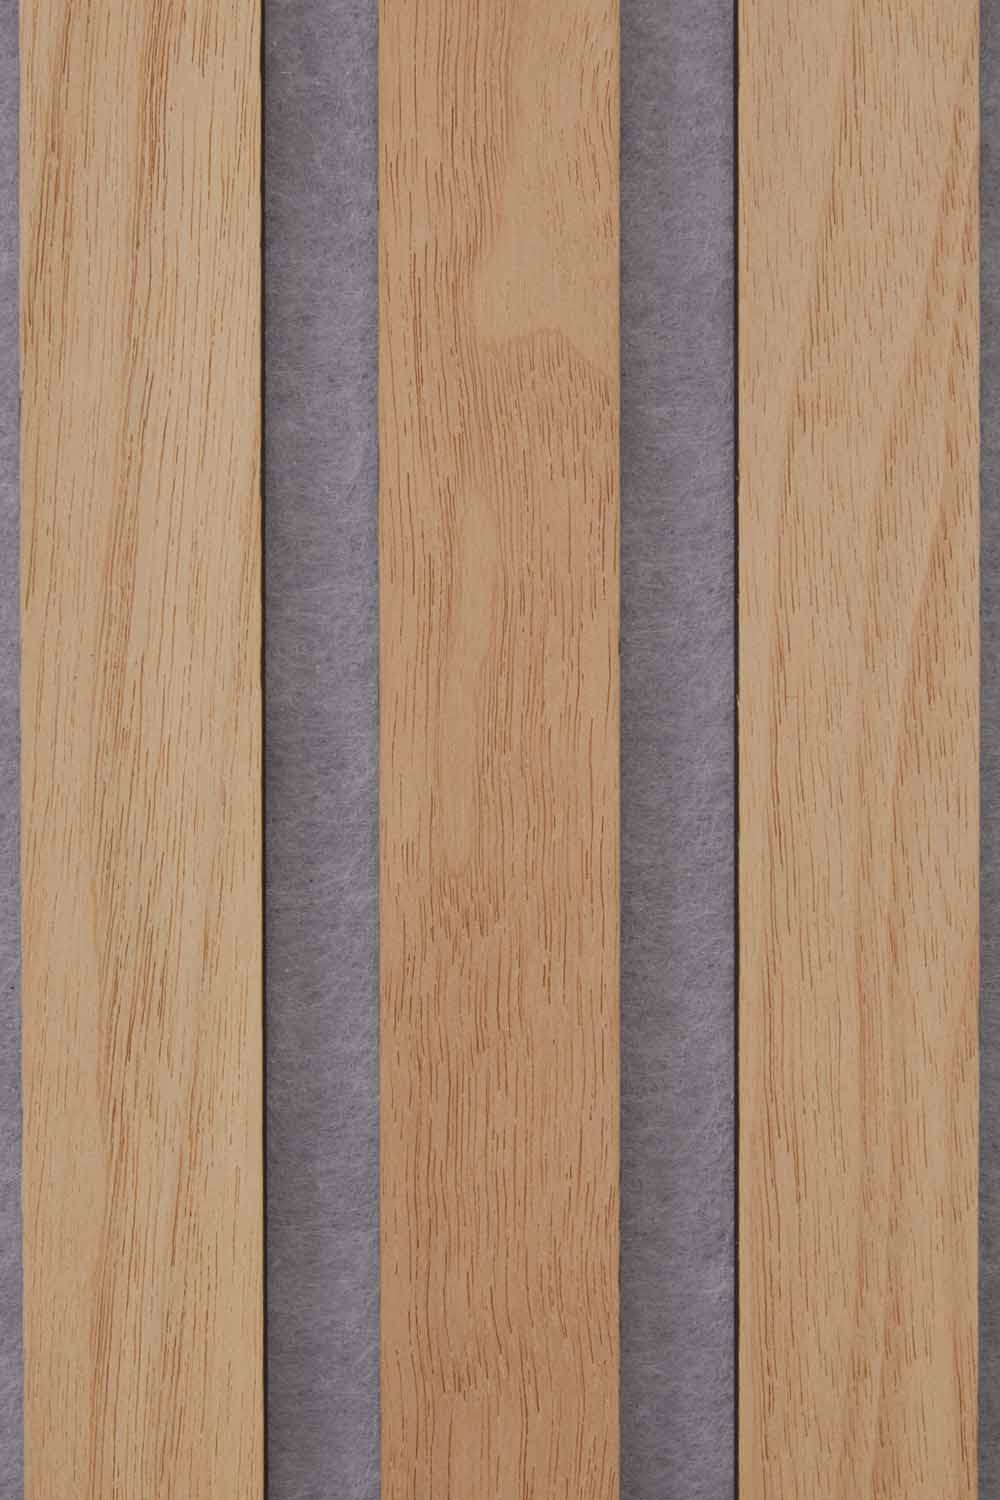 Close up of three oiled Natural Oak slats on a grey felt backing.